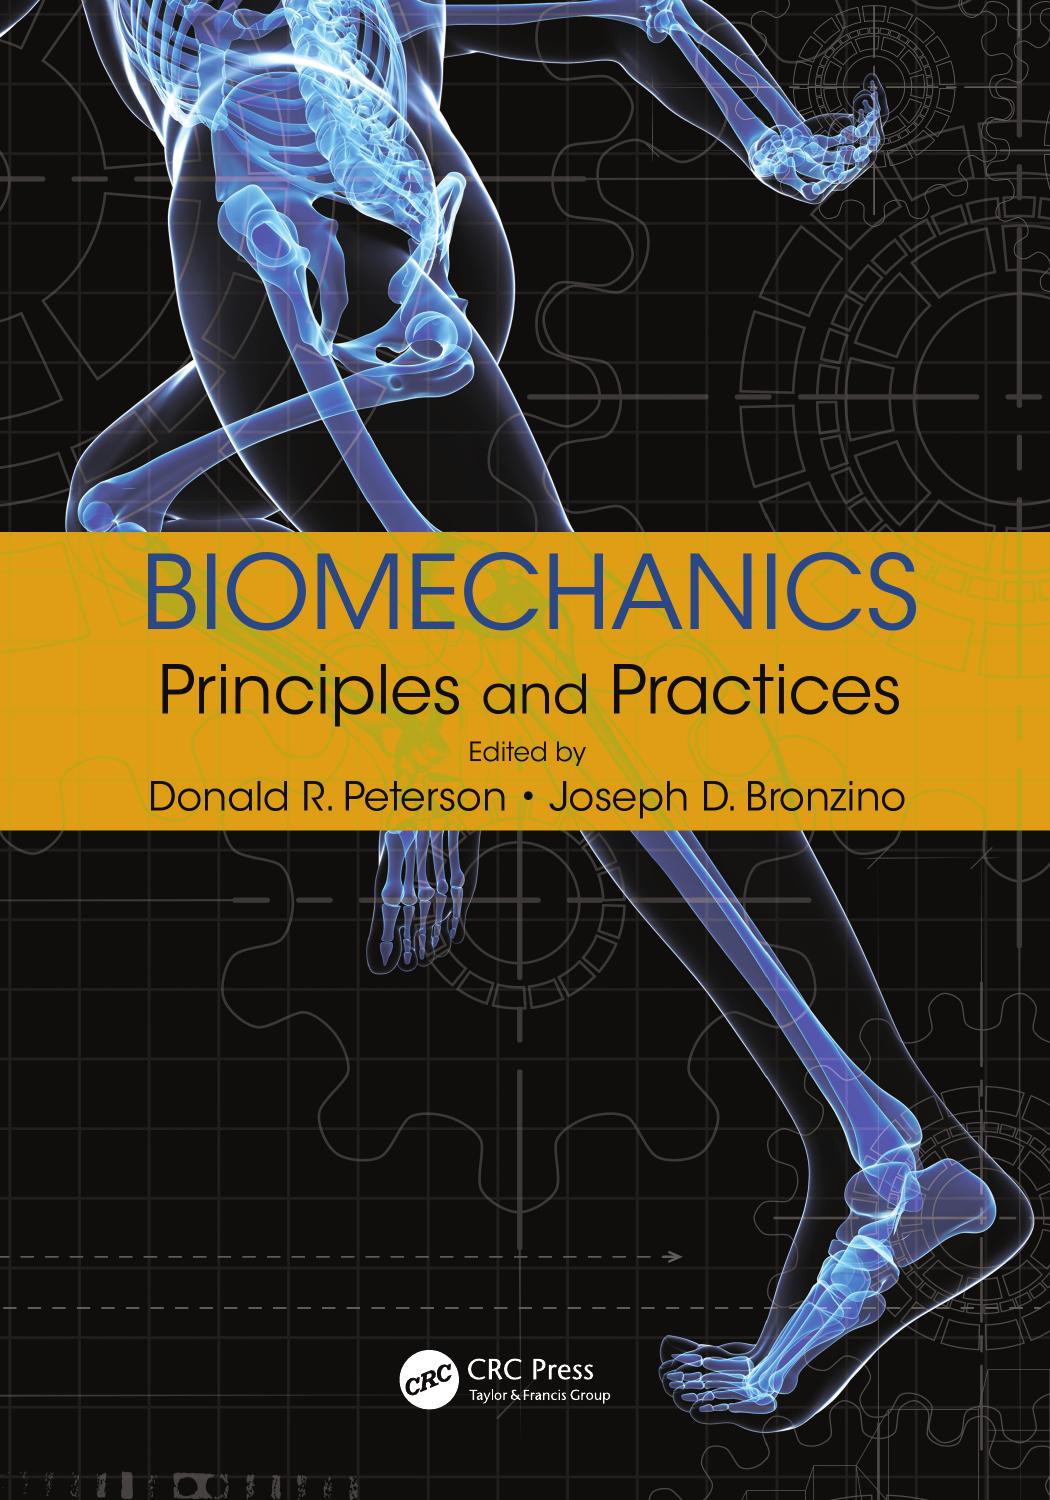 Biomechanics: Principles and Practices